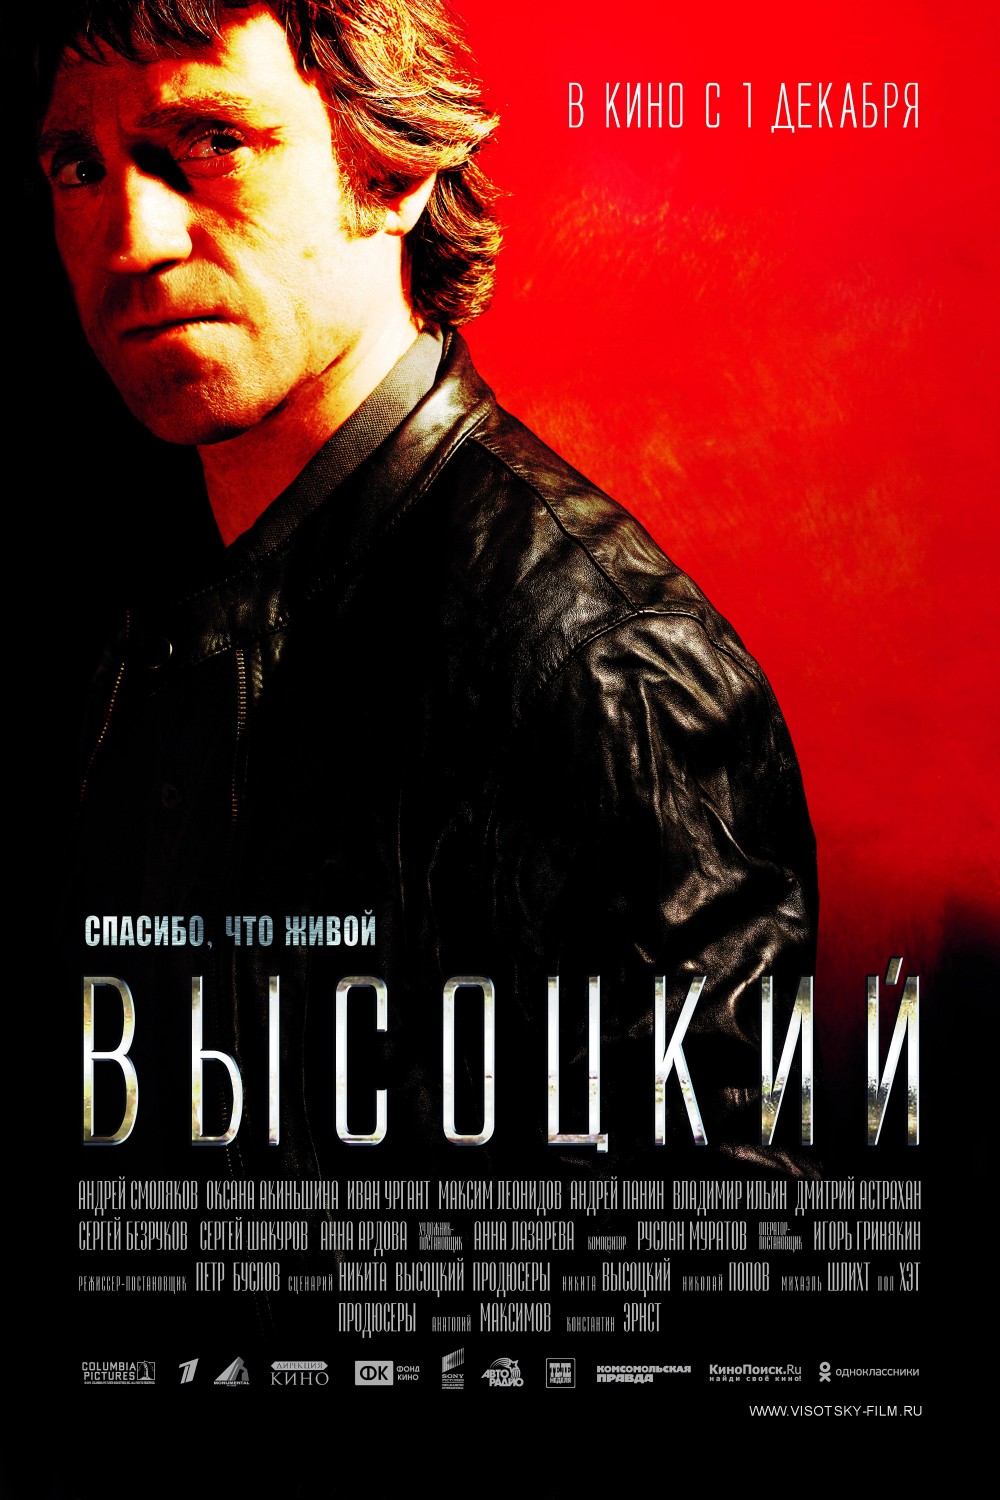 Extra Large Movie Poster Image for Vysotsky: Thank God I'm Alive 